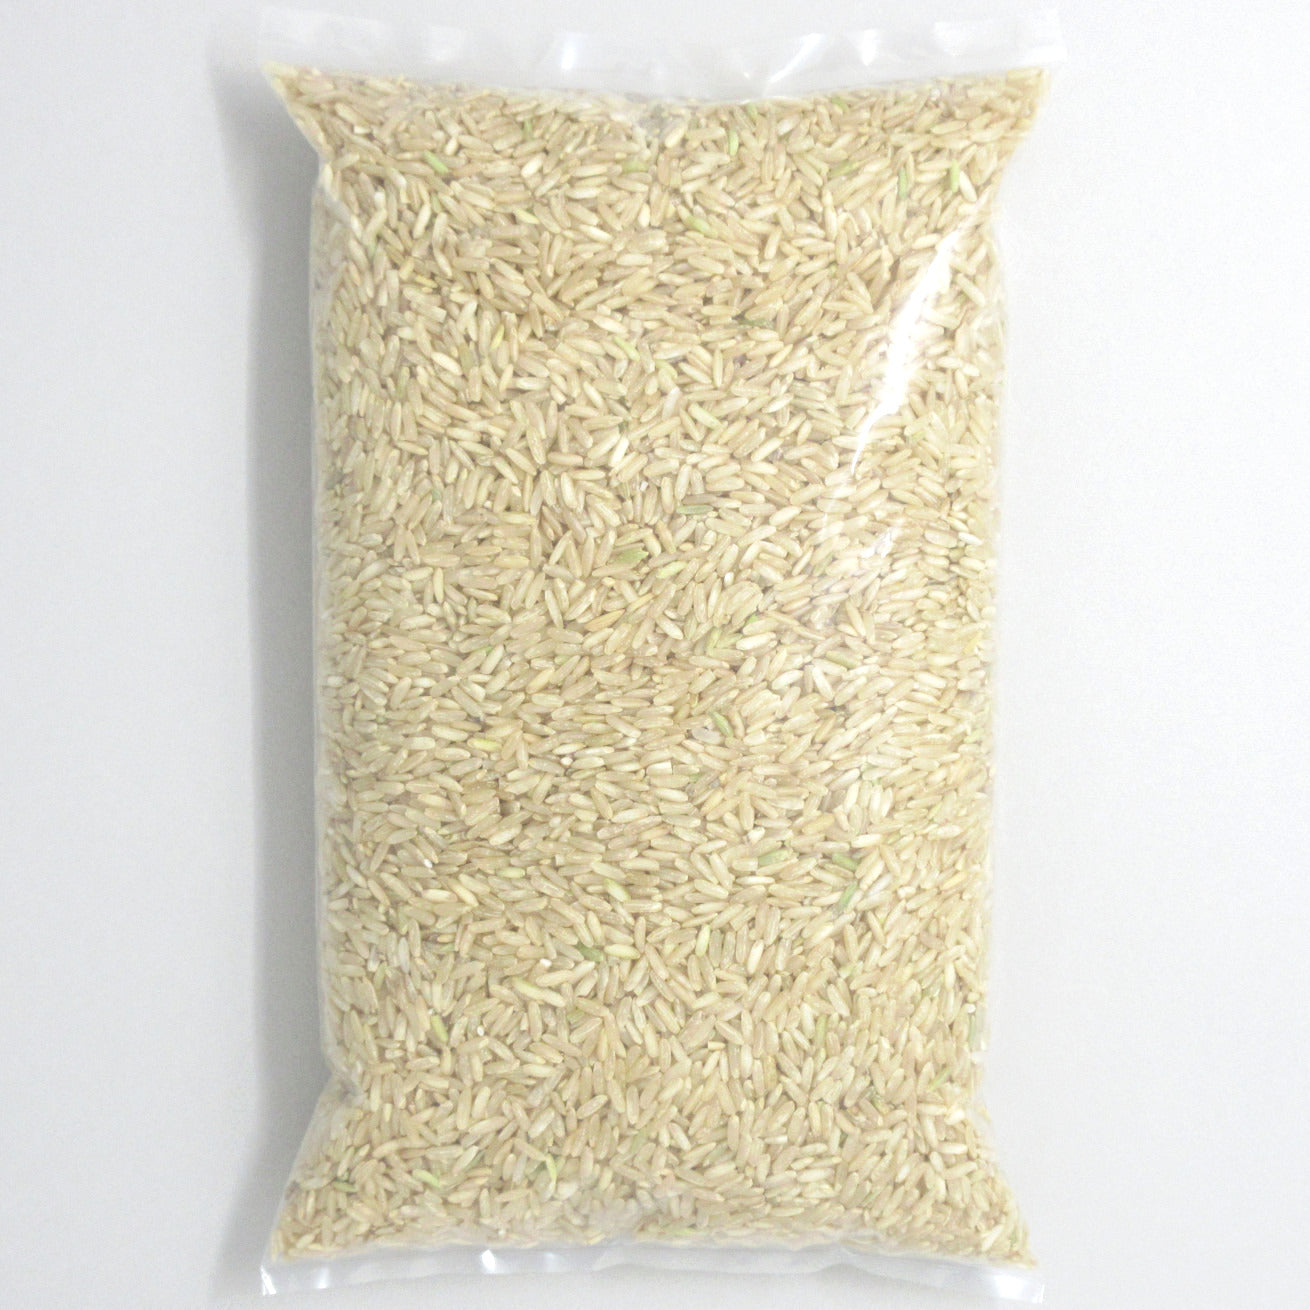 Flour Barrel product image - Long Grain Brown Rice